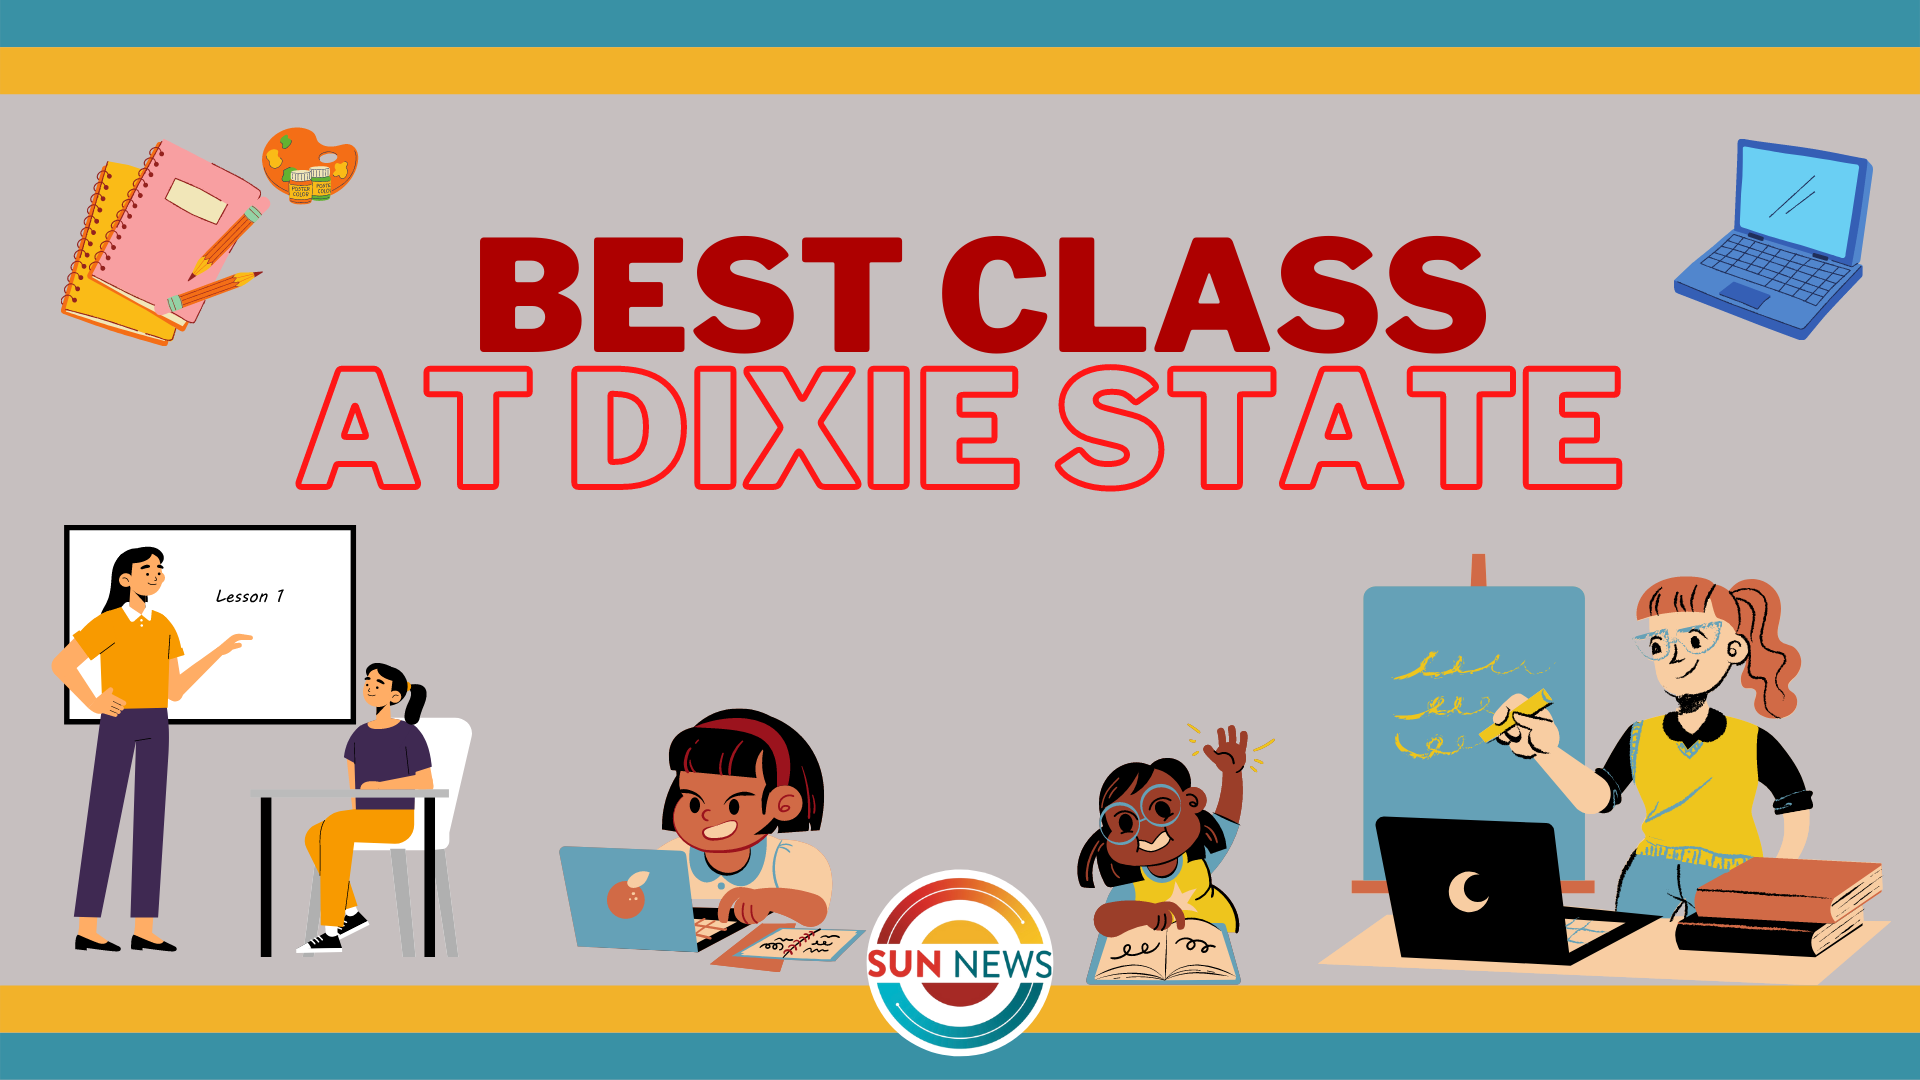 DSU students’ favorite classes